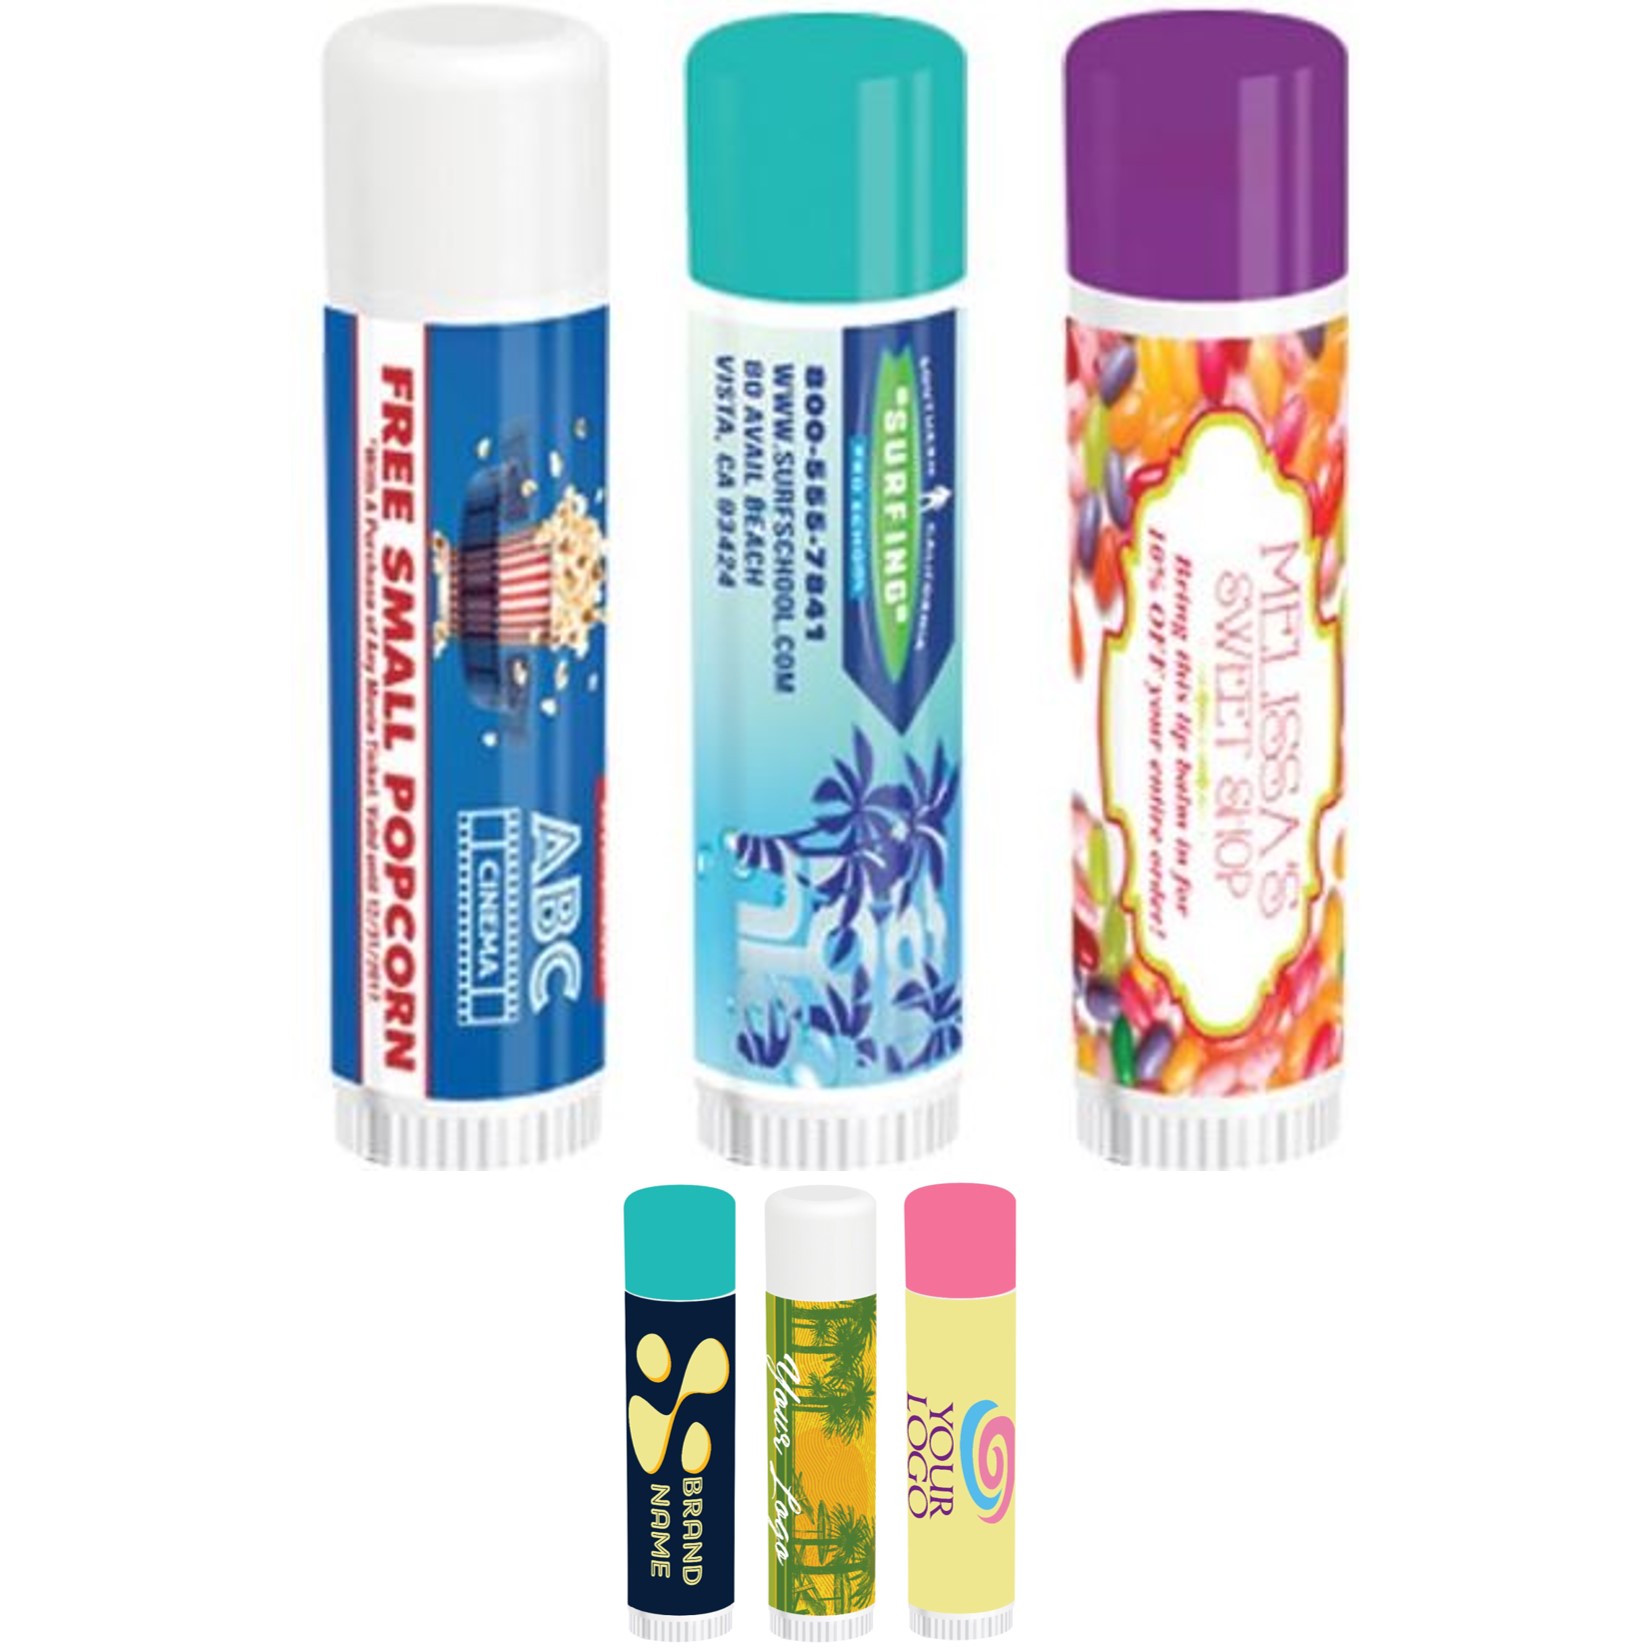 lip balm tubes in three different designs